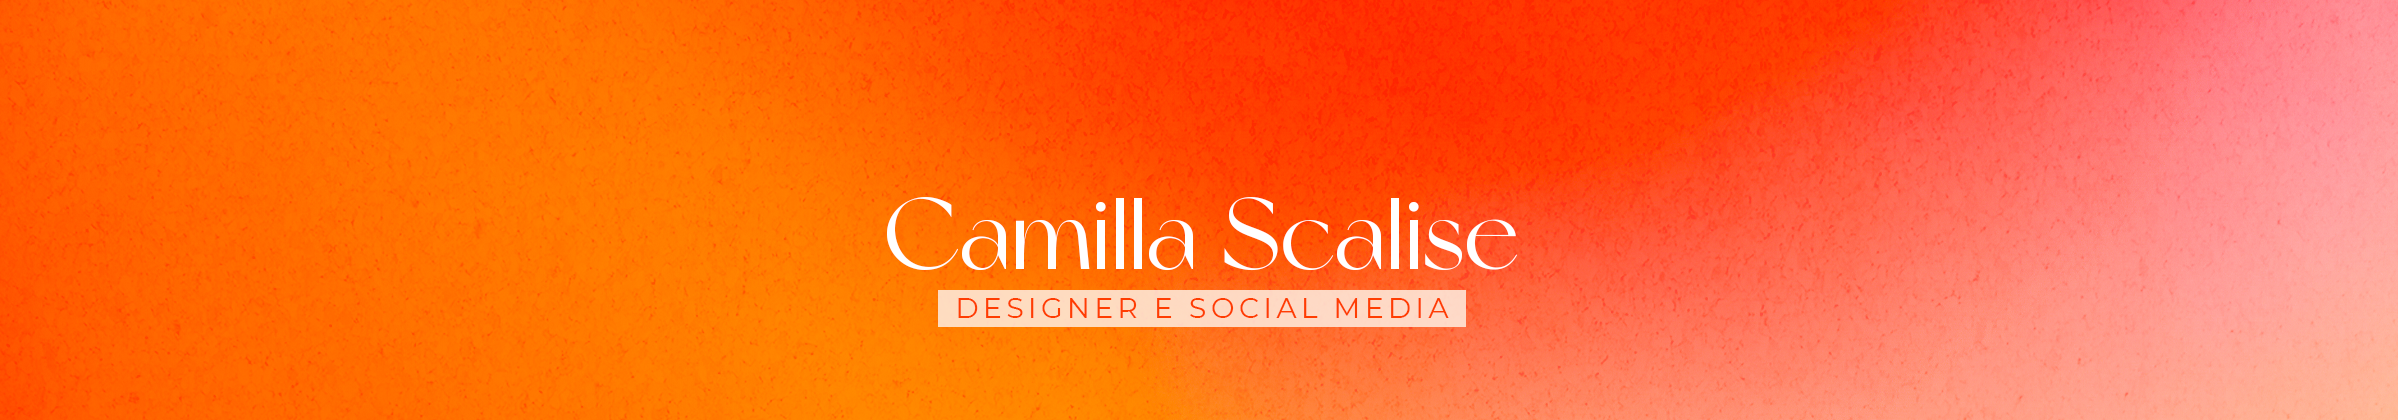 Camilla Scalise's profile banner